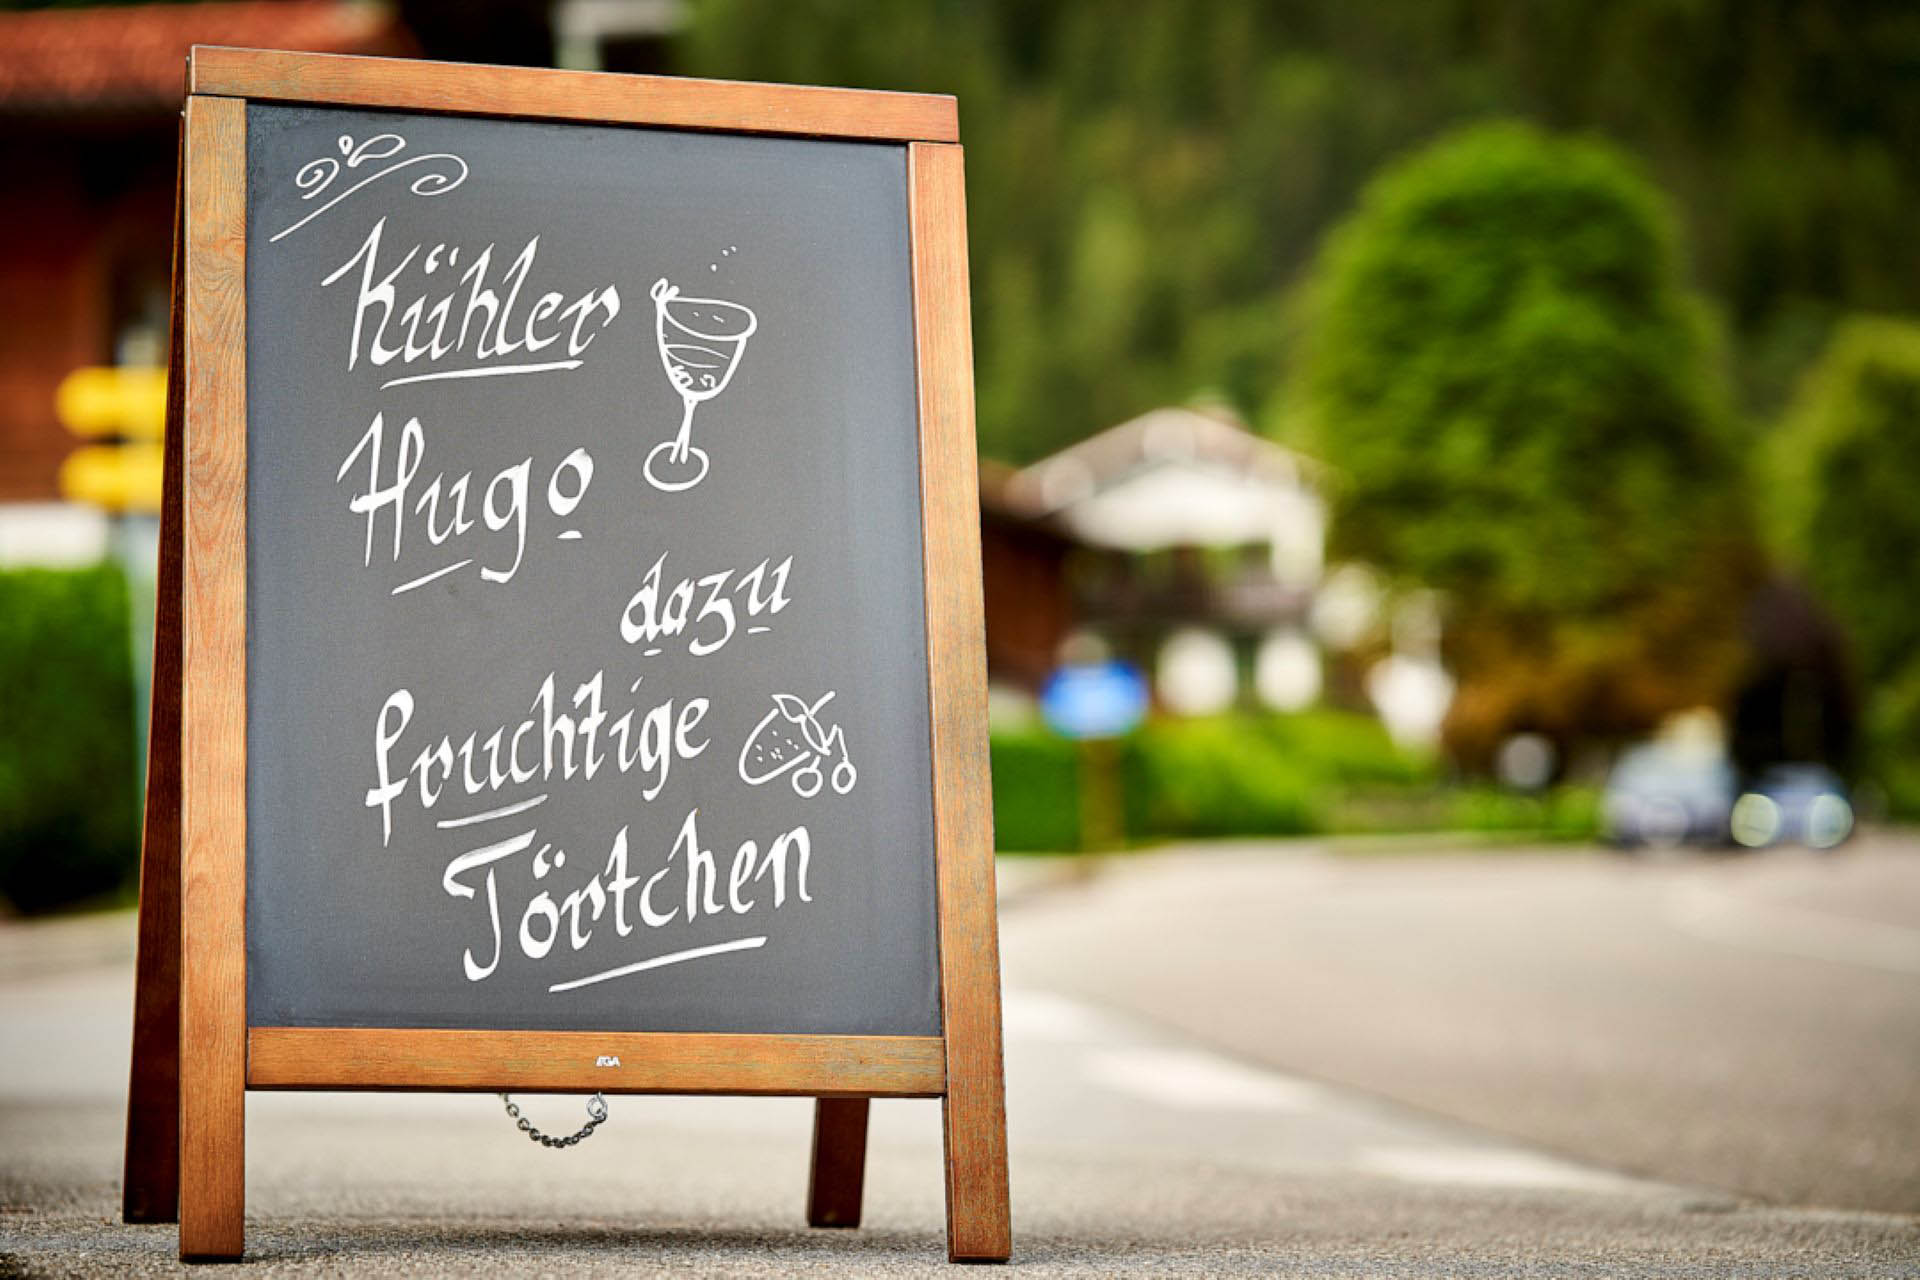 Café Kaffeesatz, Schoenau am Koenigssee, Aufsteller Hugo